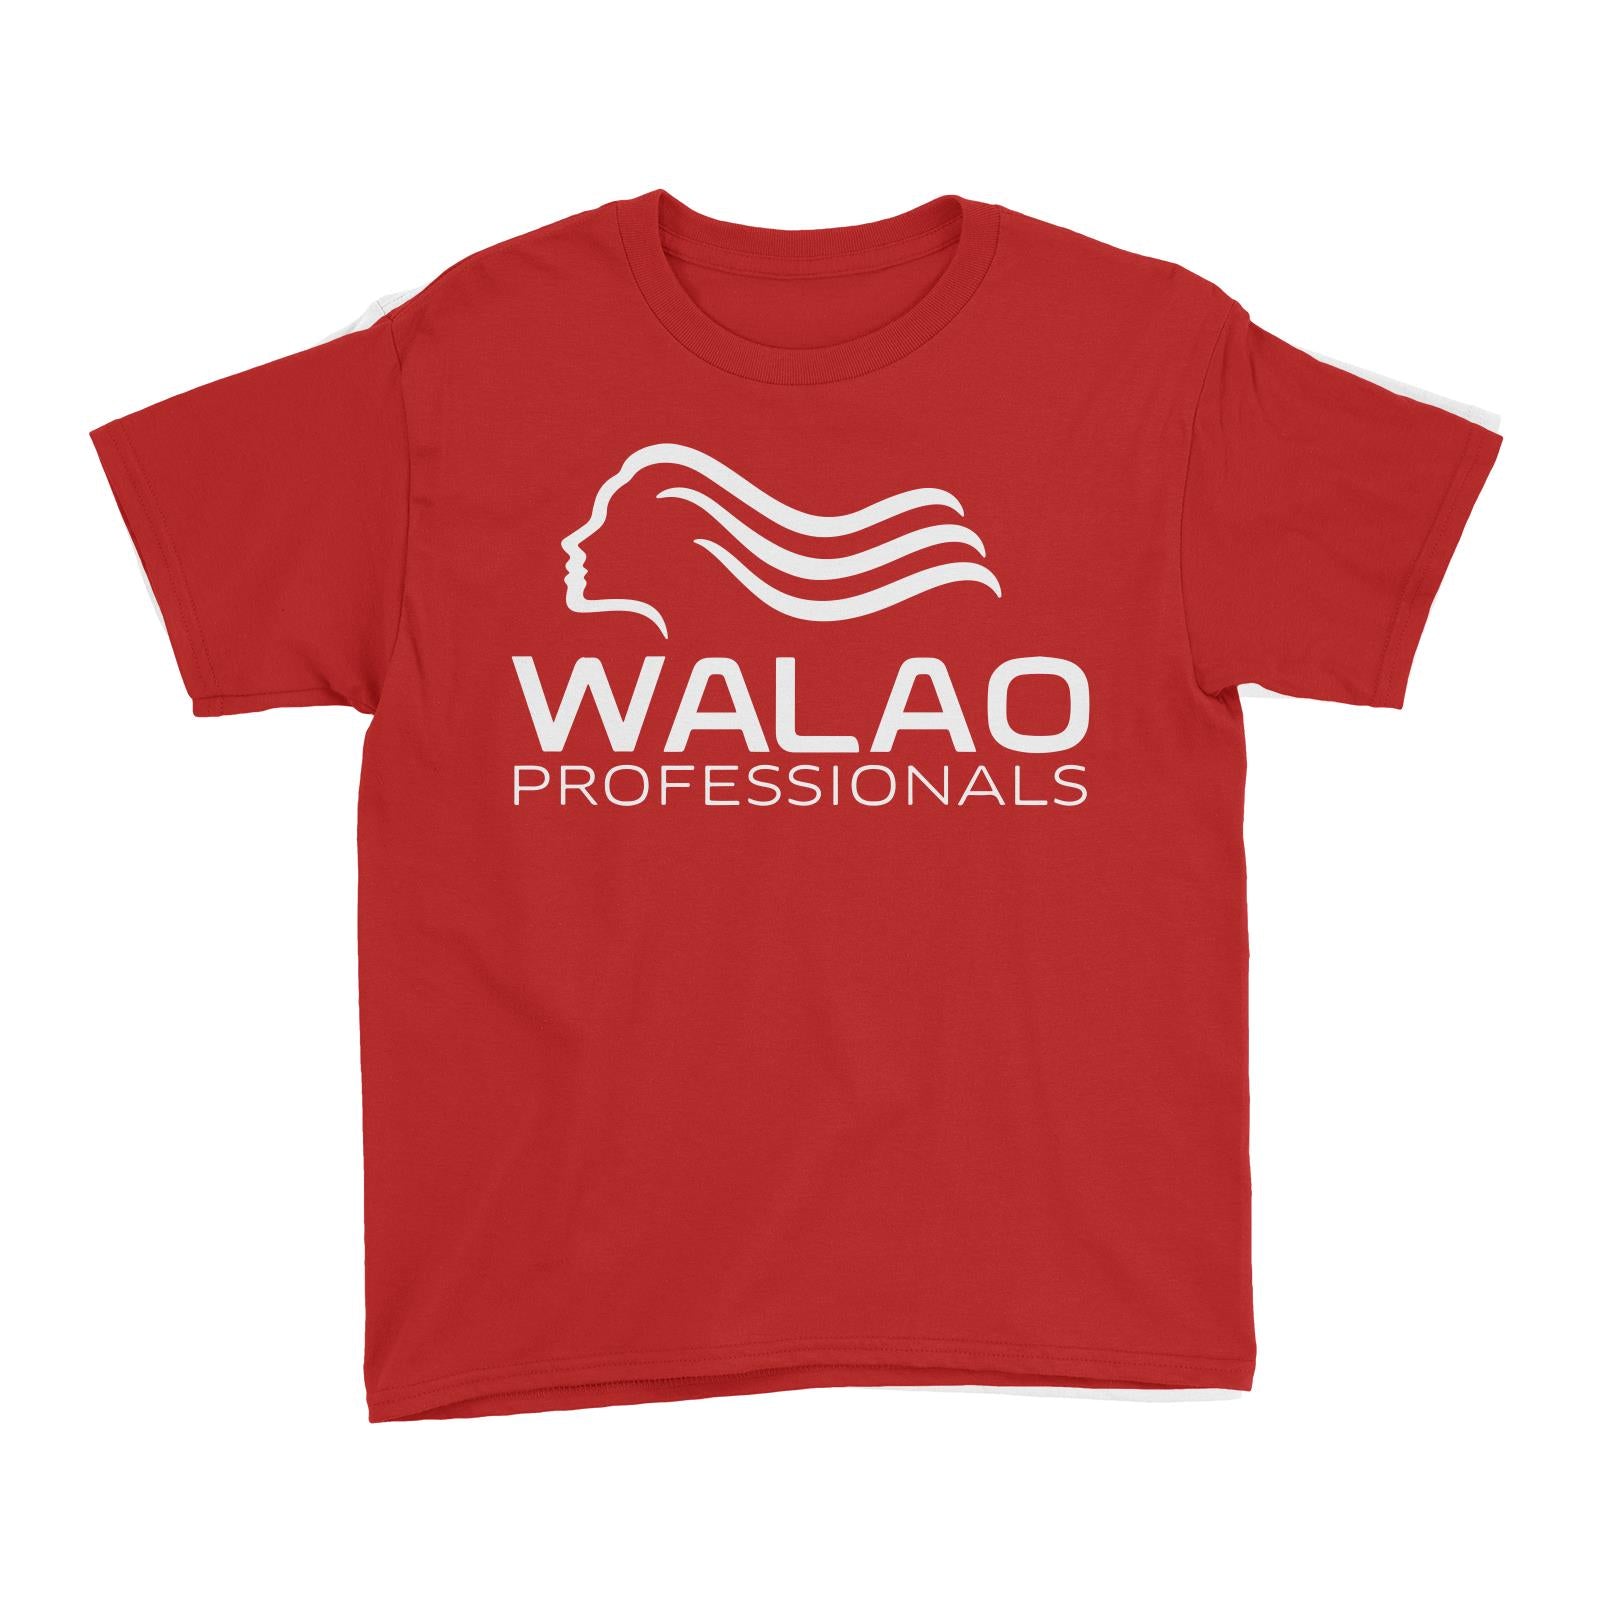 Slang Statement Walao Professional Kid's T-Shirt